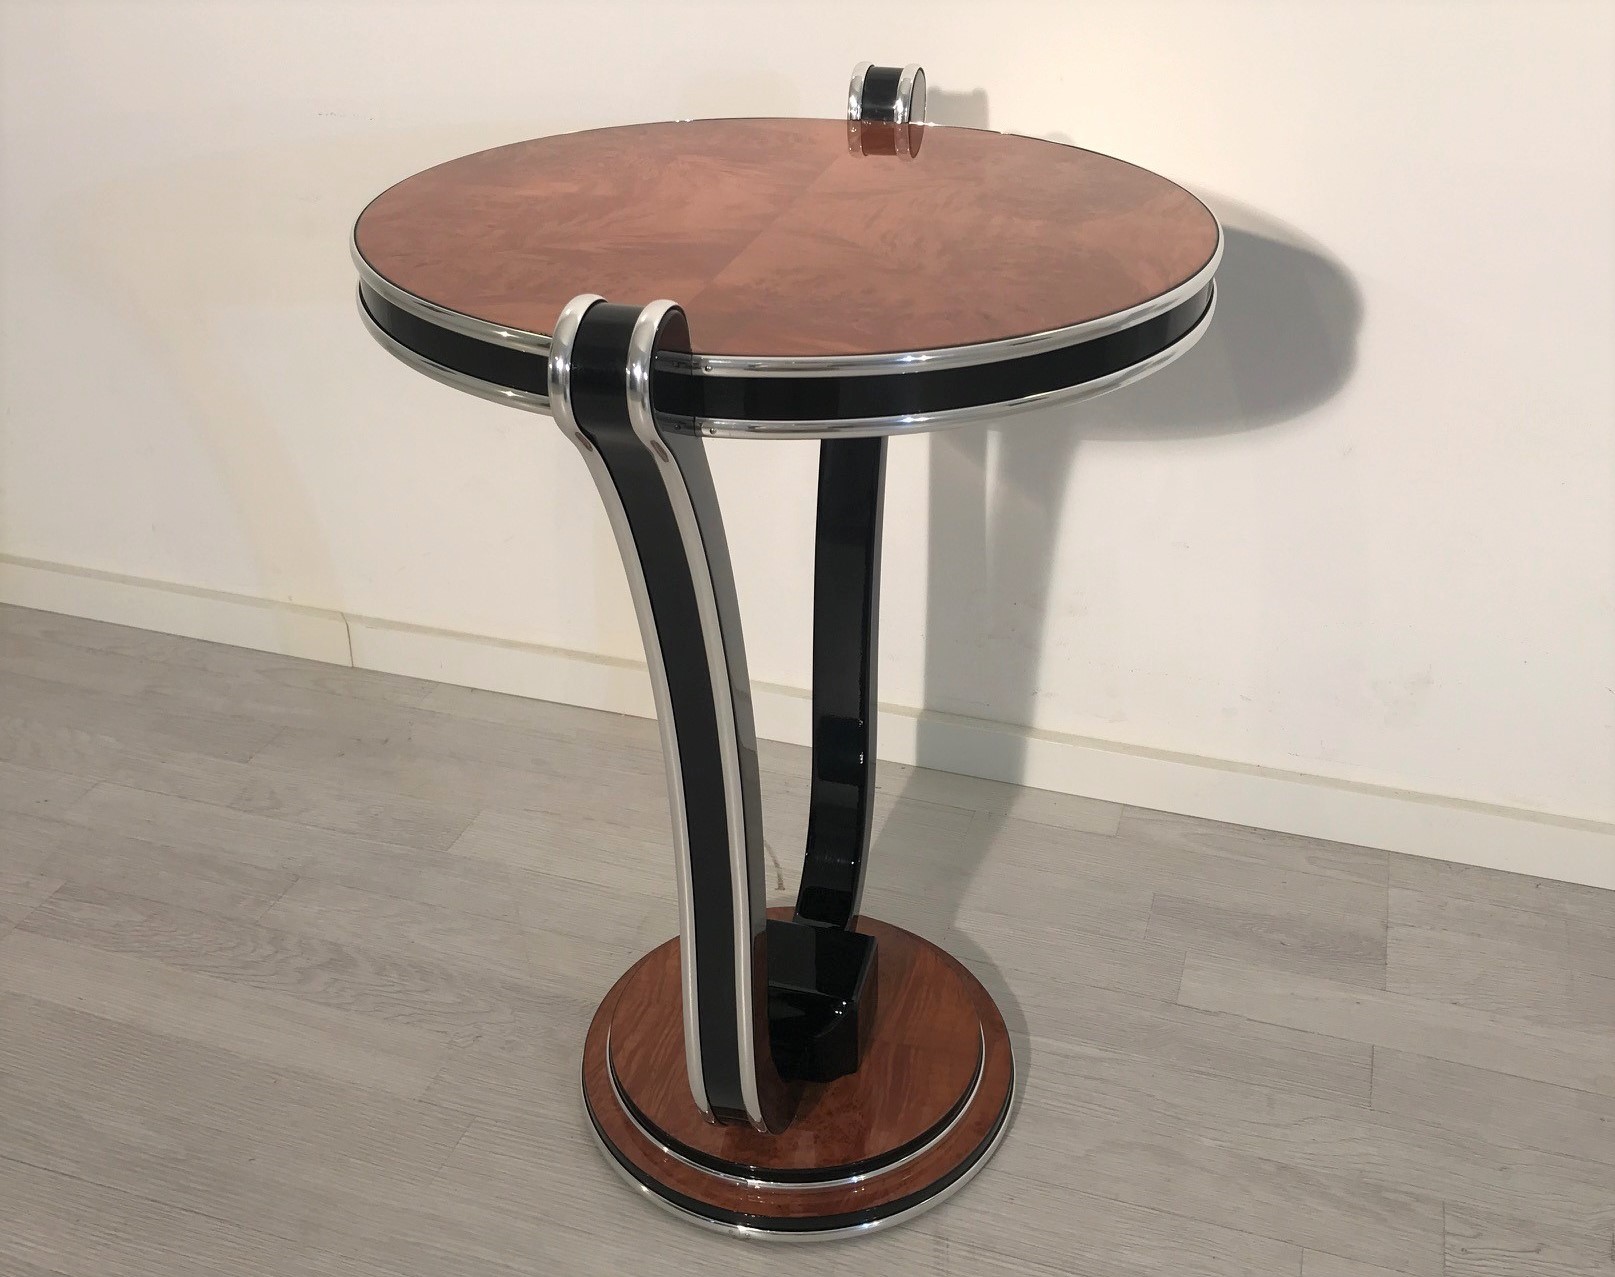 Art Deco Side Tables For Living Room